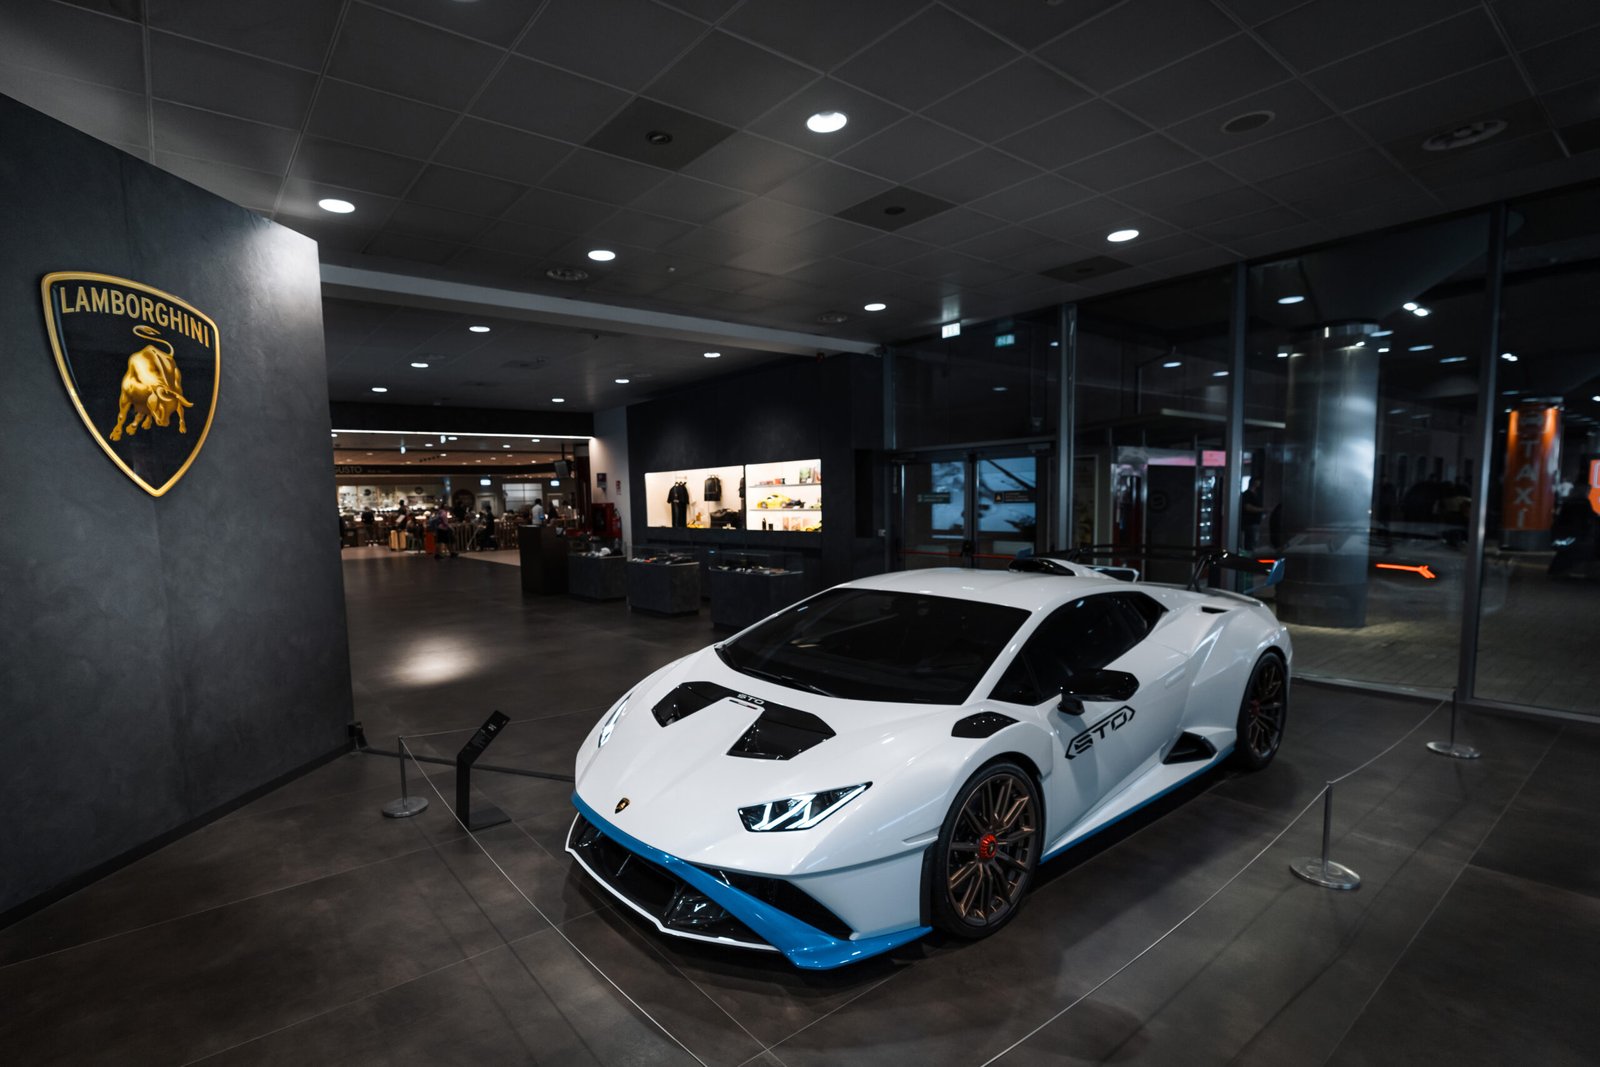 Automobili Lamborghini renews and develops partnership with Bologna's Marconi Airport